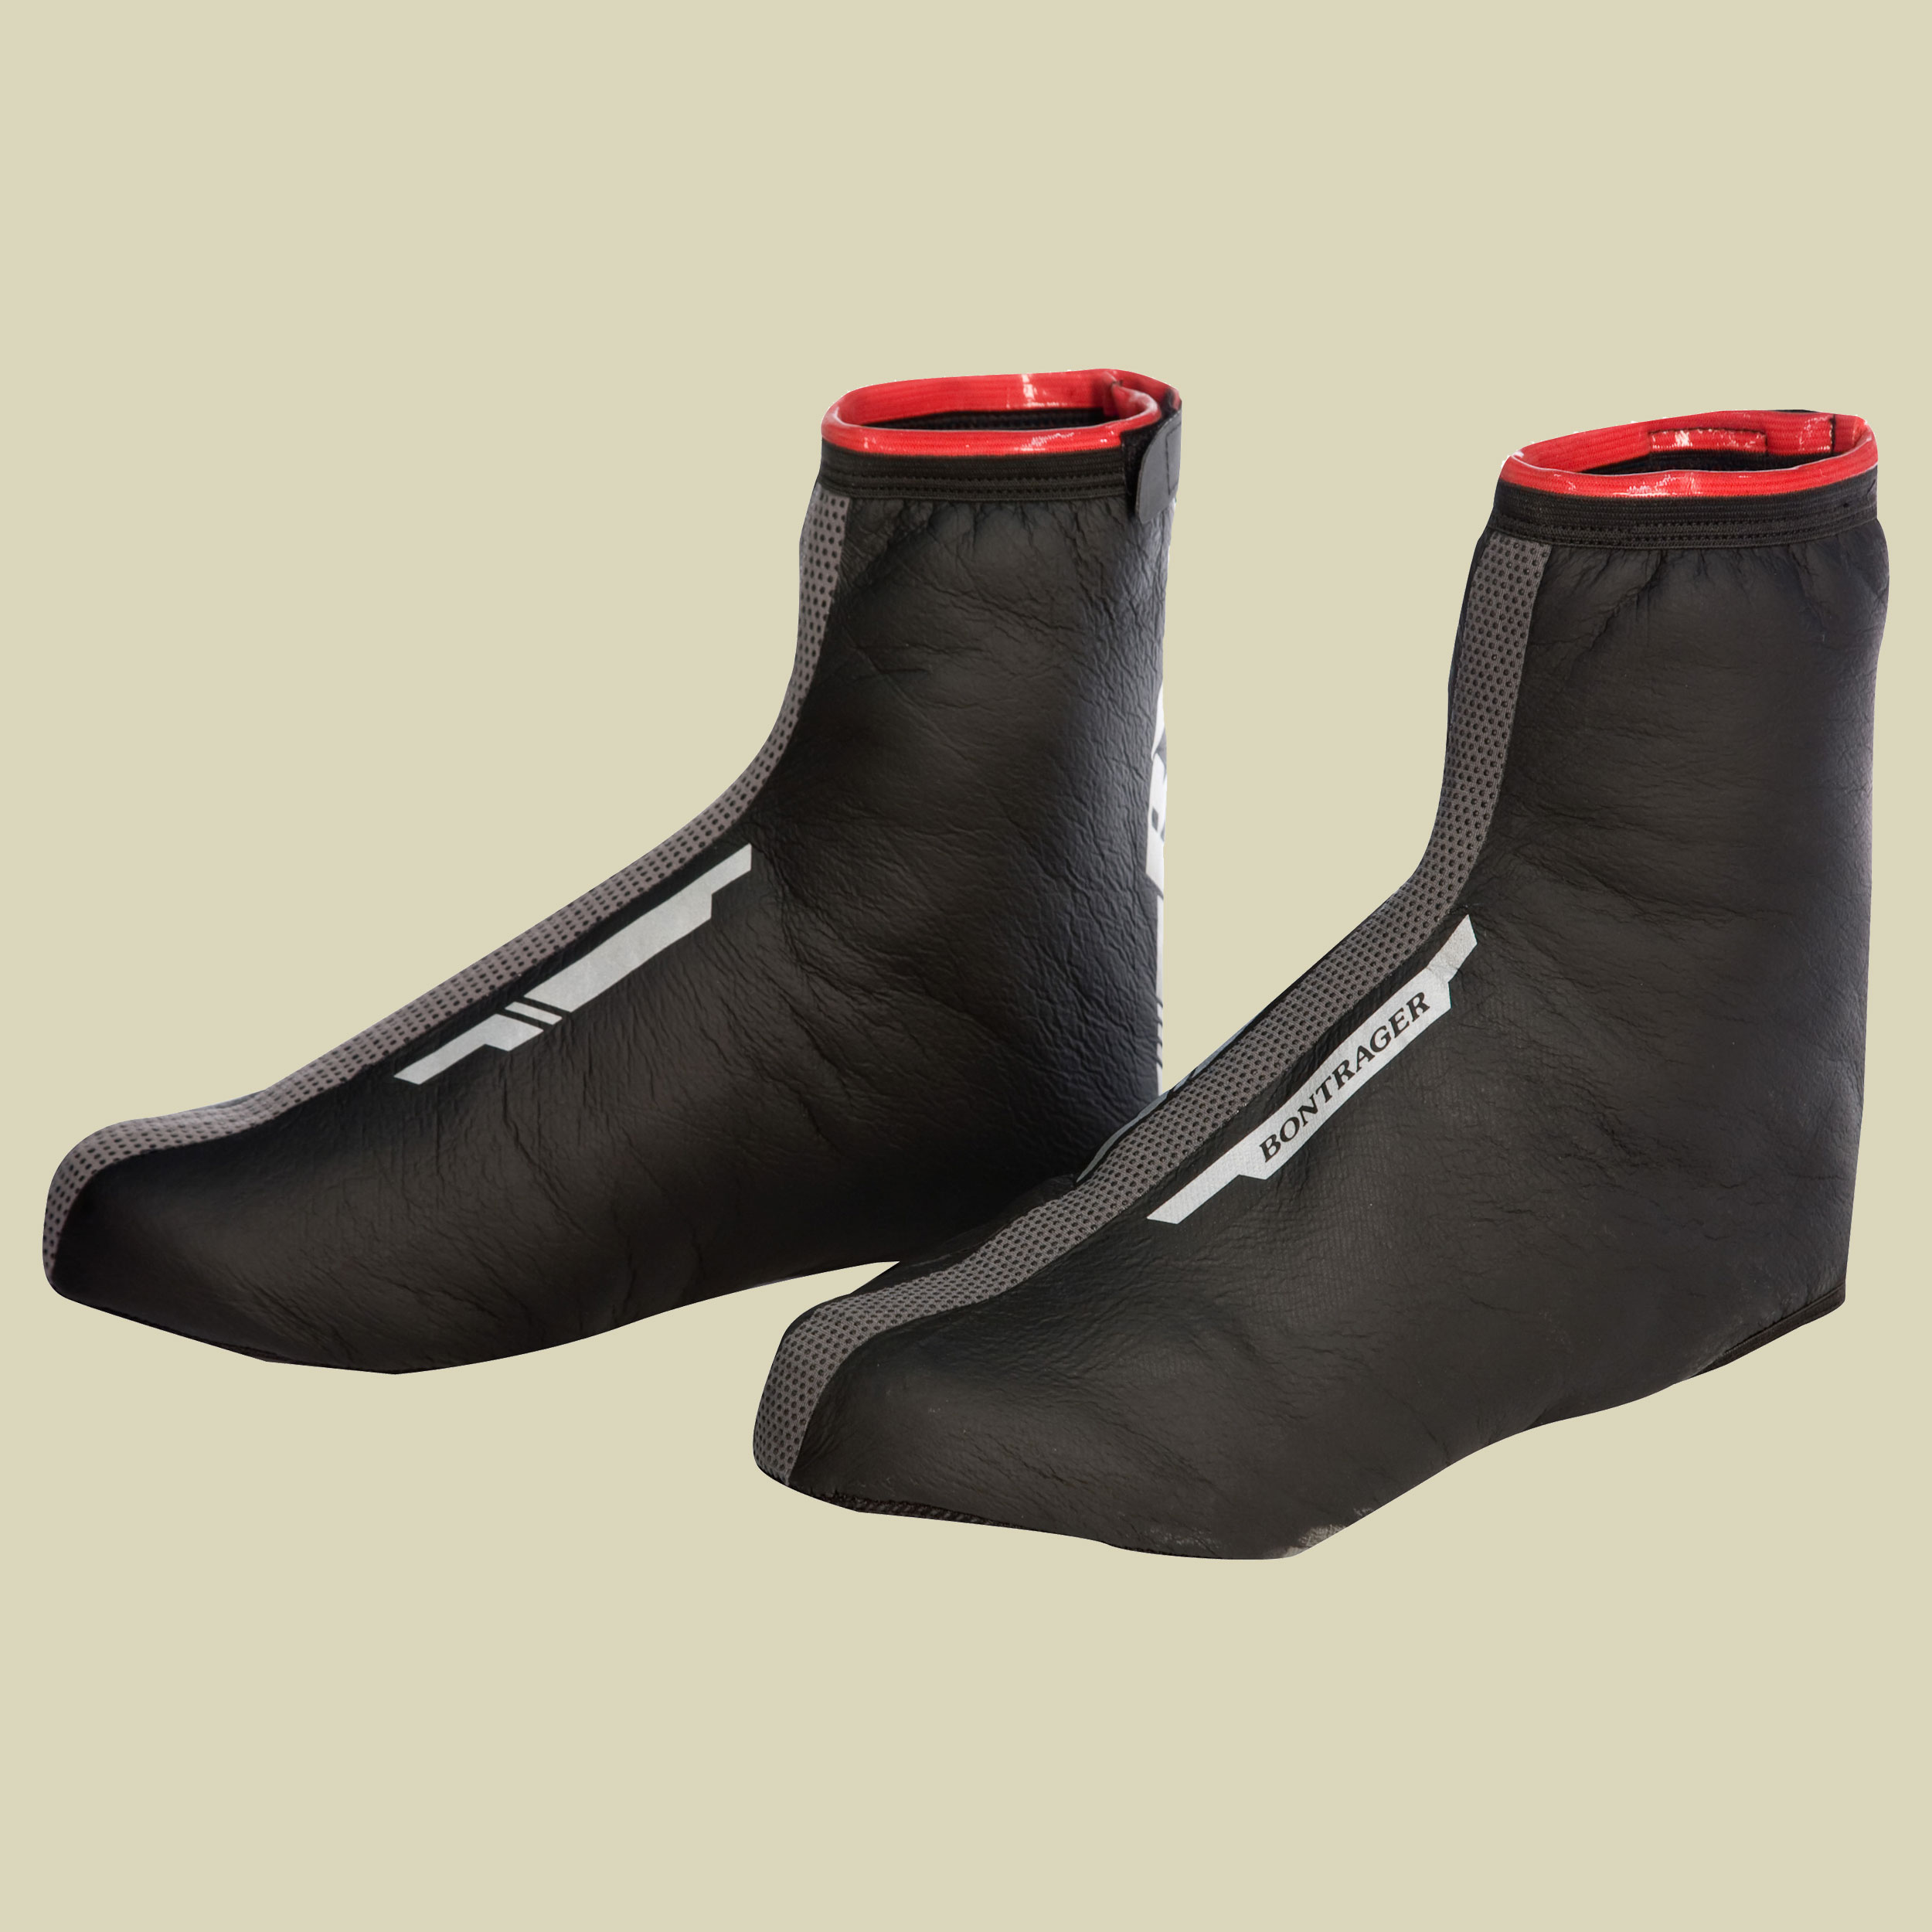 RXL Thermal Shoe Cover Größe 39-40 farbe black